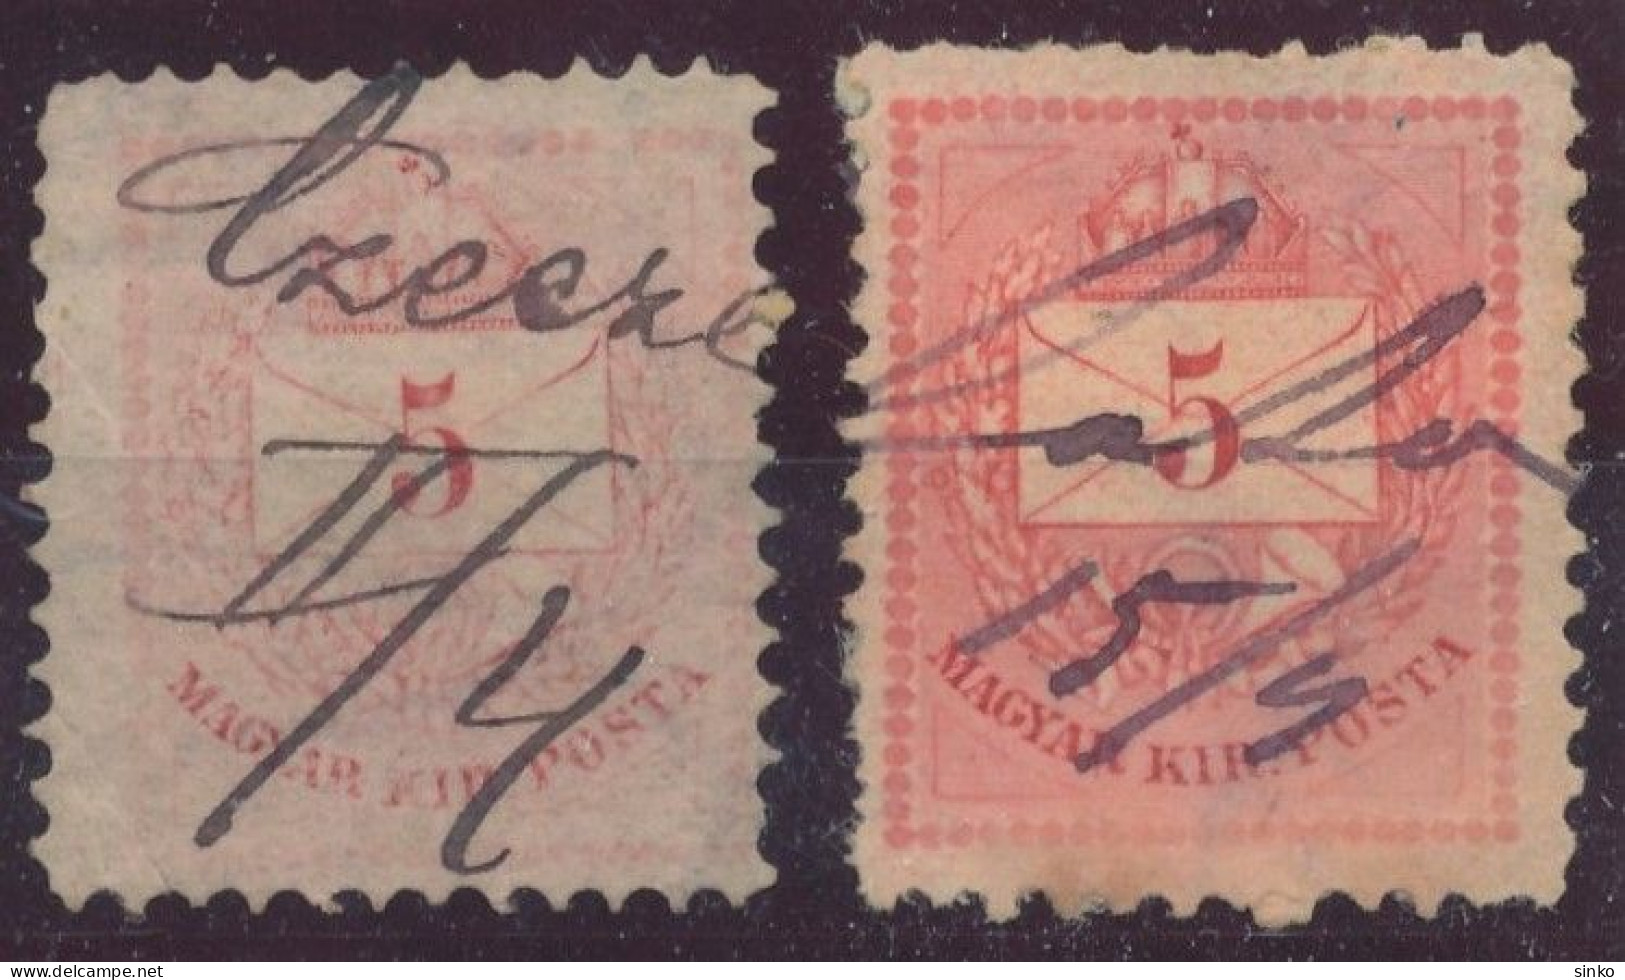 1881. Colour Number Krajcar 5kr Stamps - ...-1867 Prefilatelia